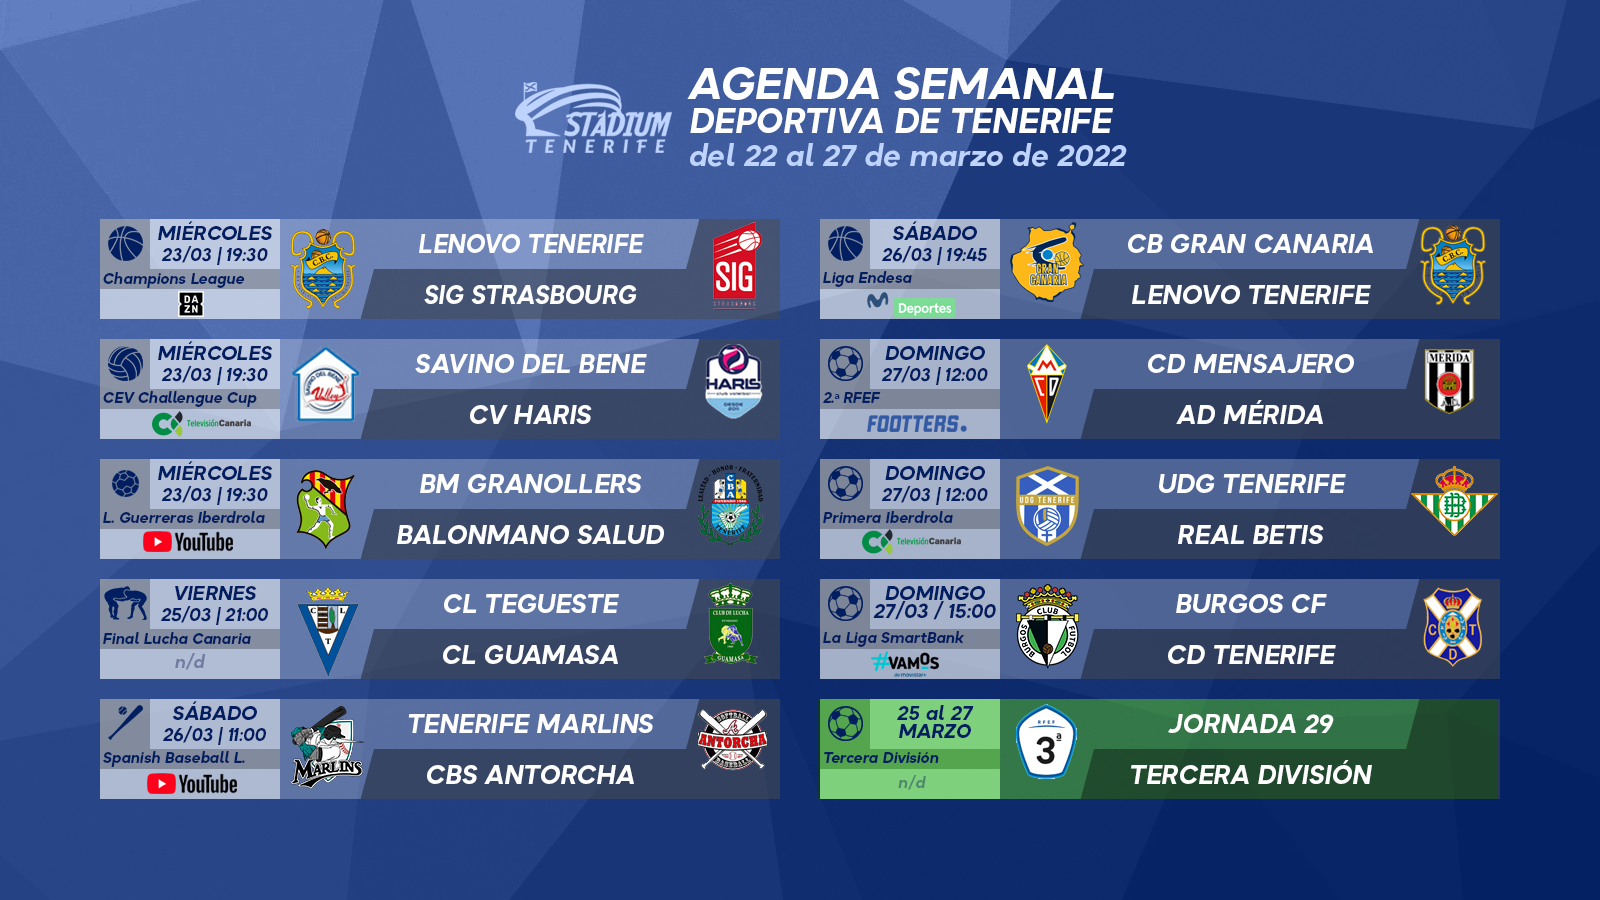 Agenda Semanal Deportiva de Tenerife (22 al 27 de marzo)